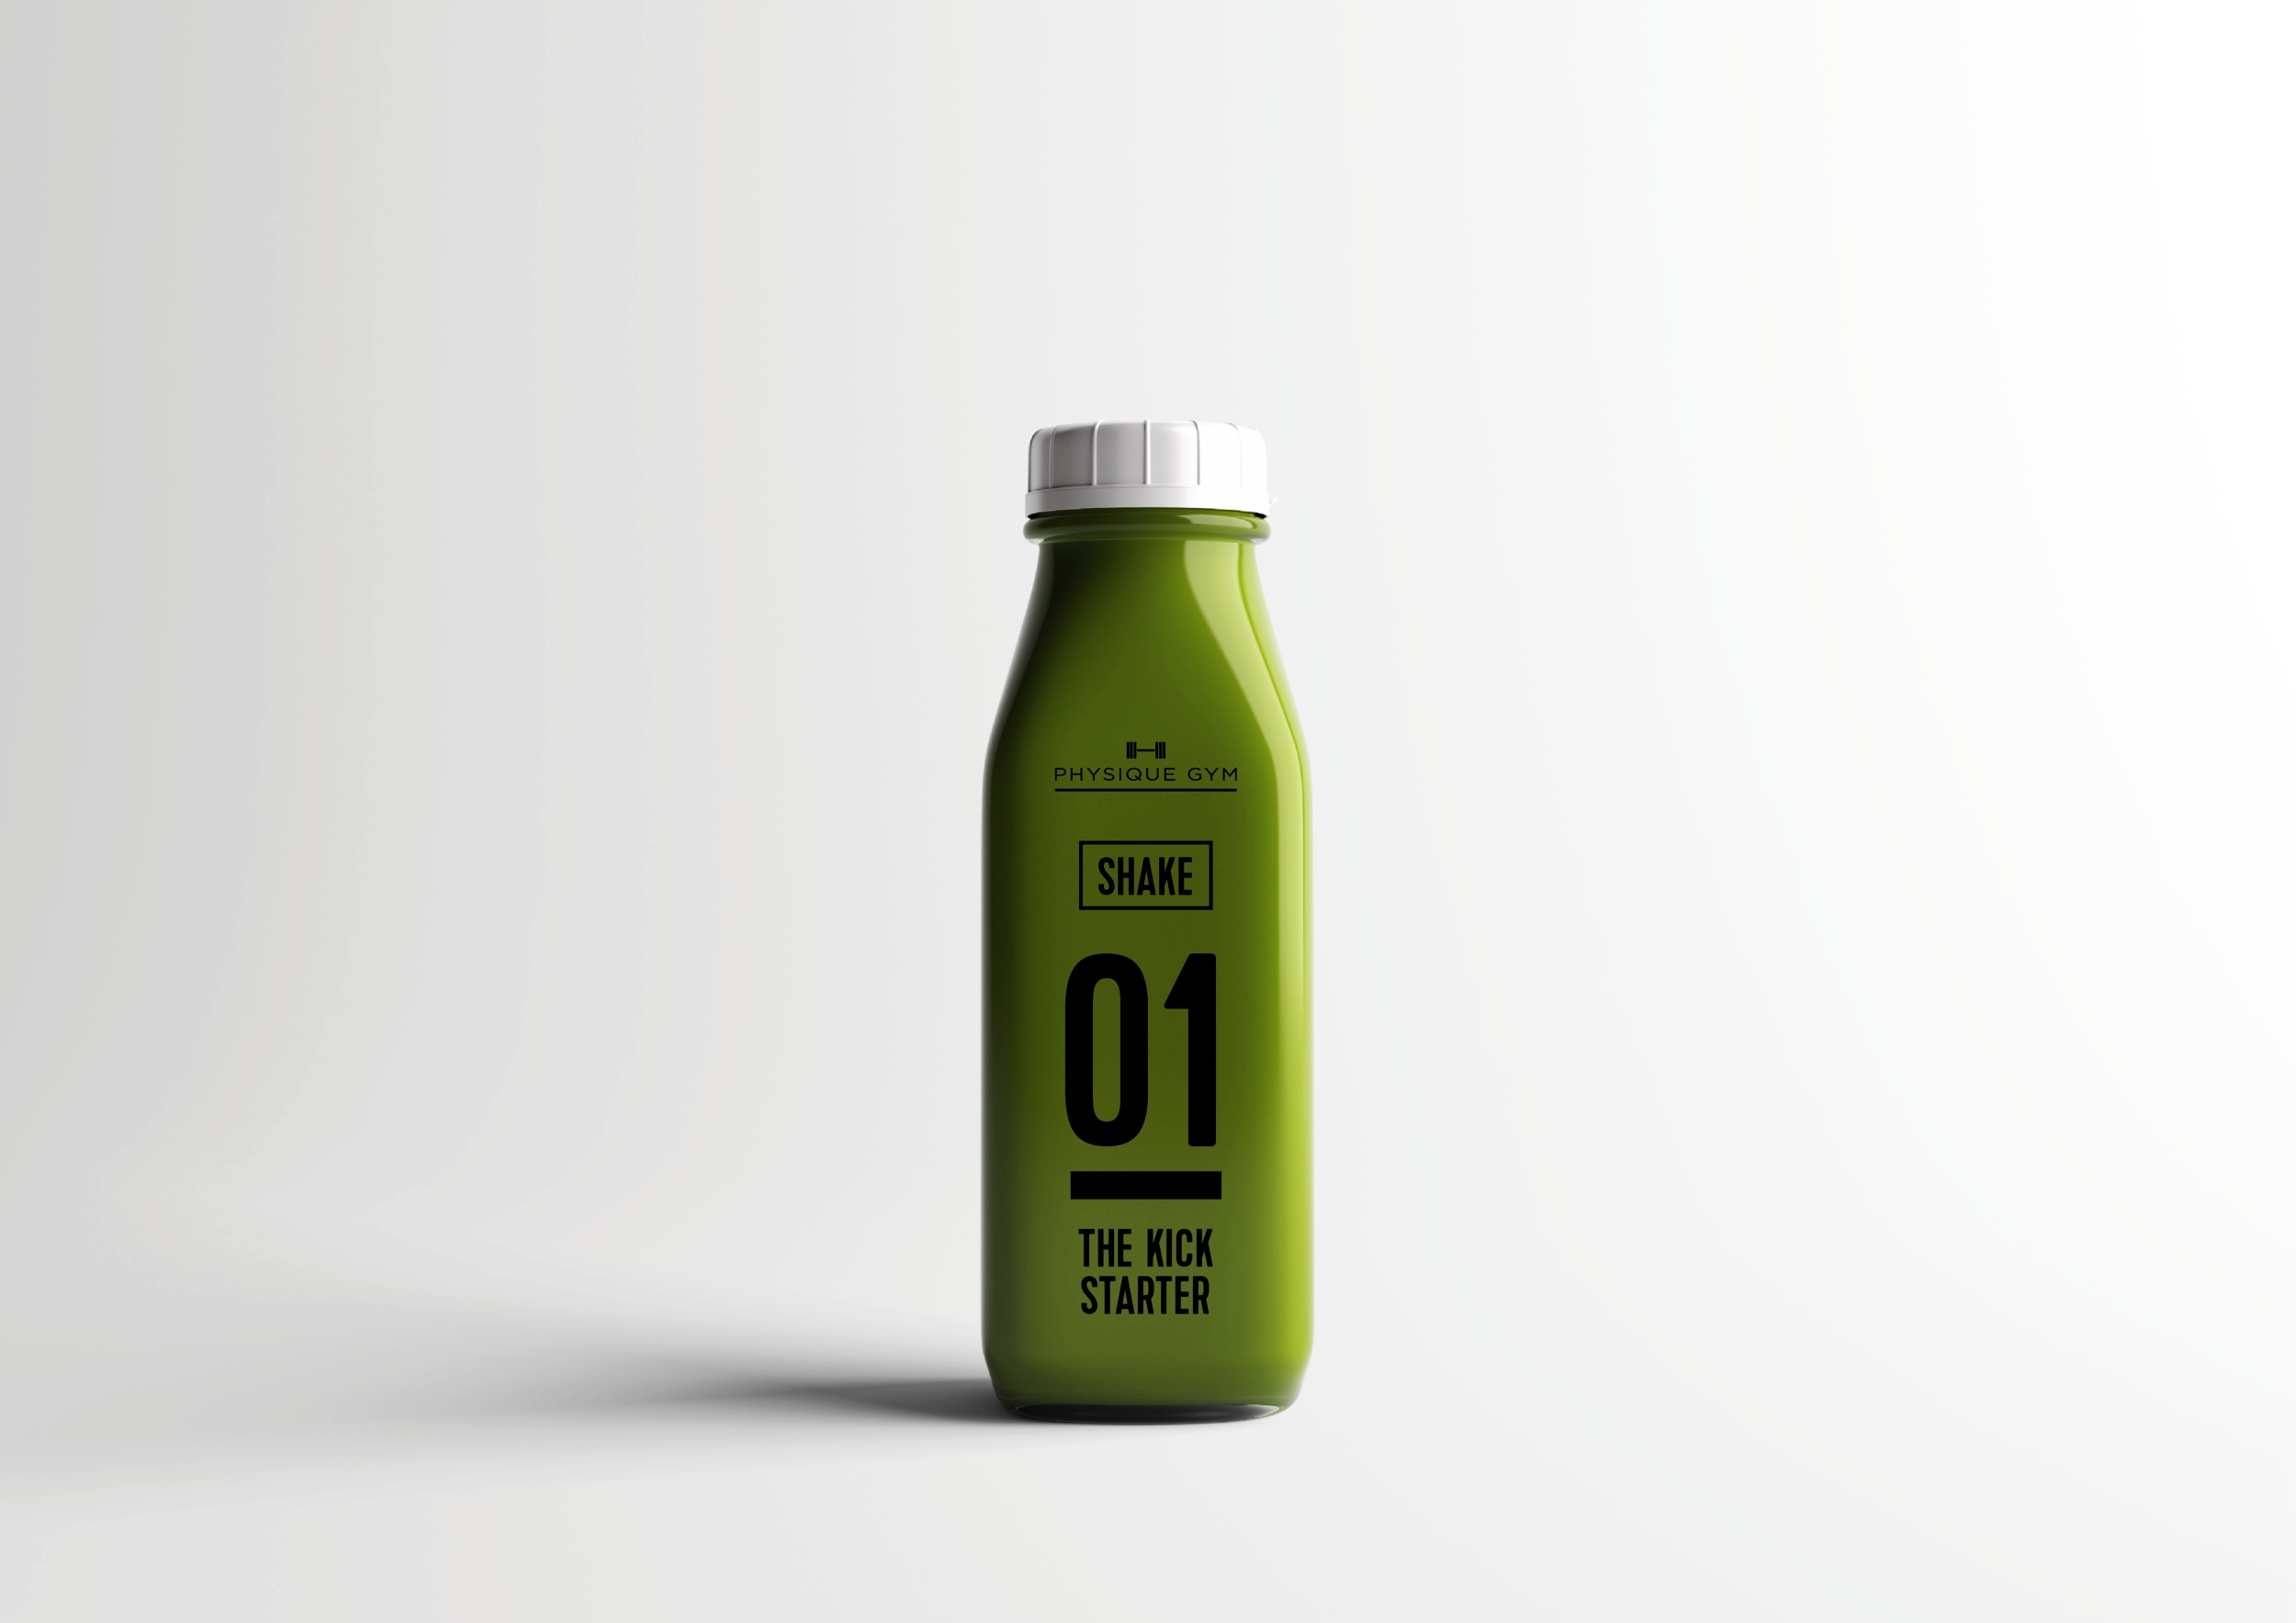 Packaging design agency UK - A green Physique Gym protein shake bottle label design